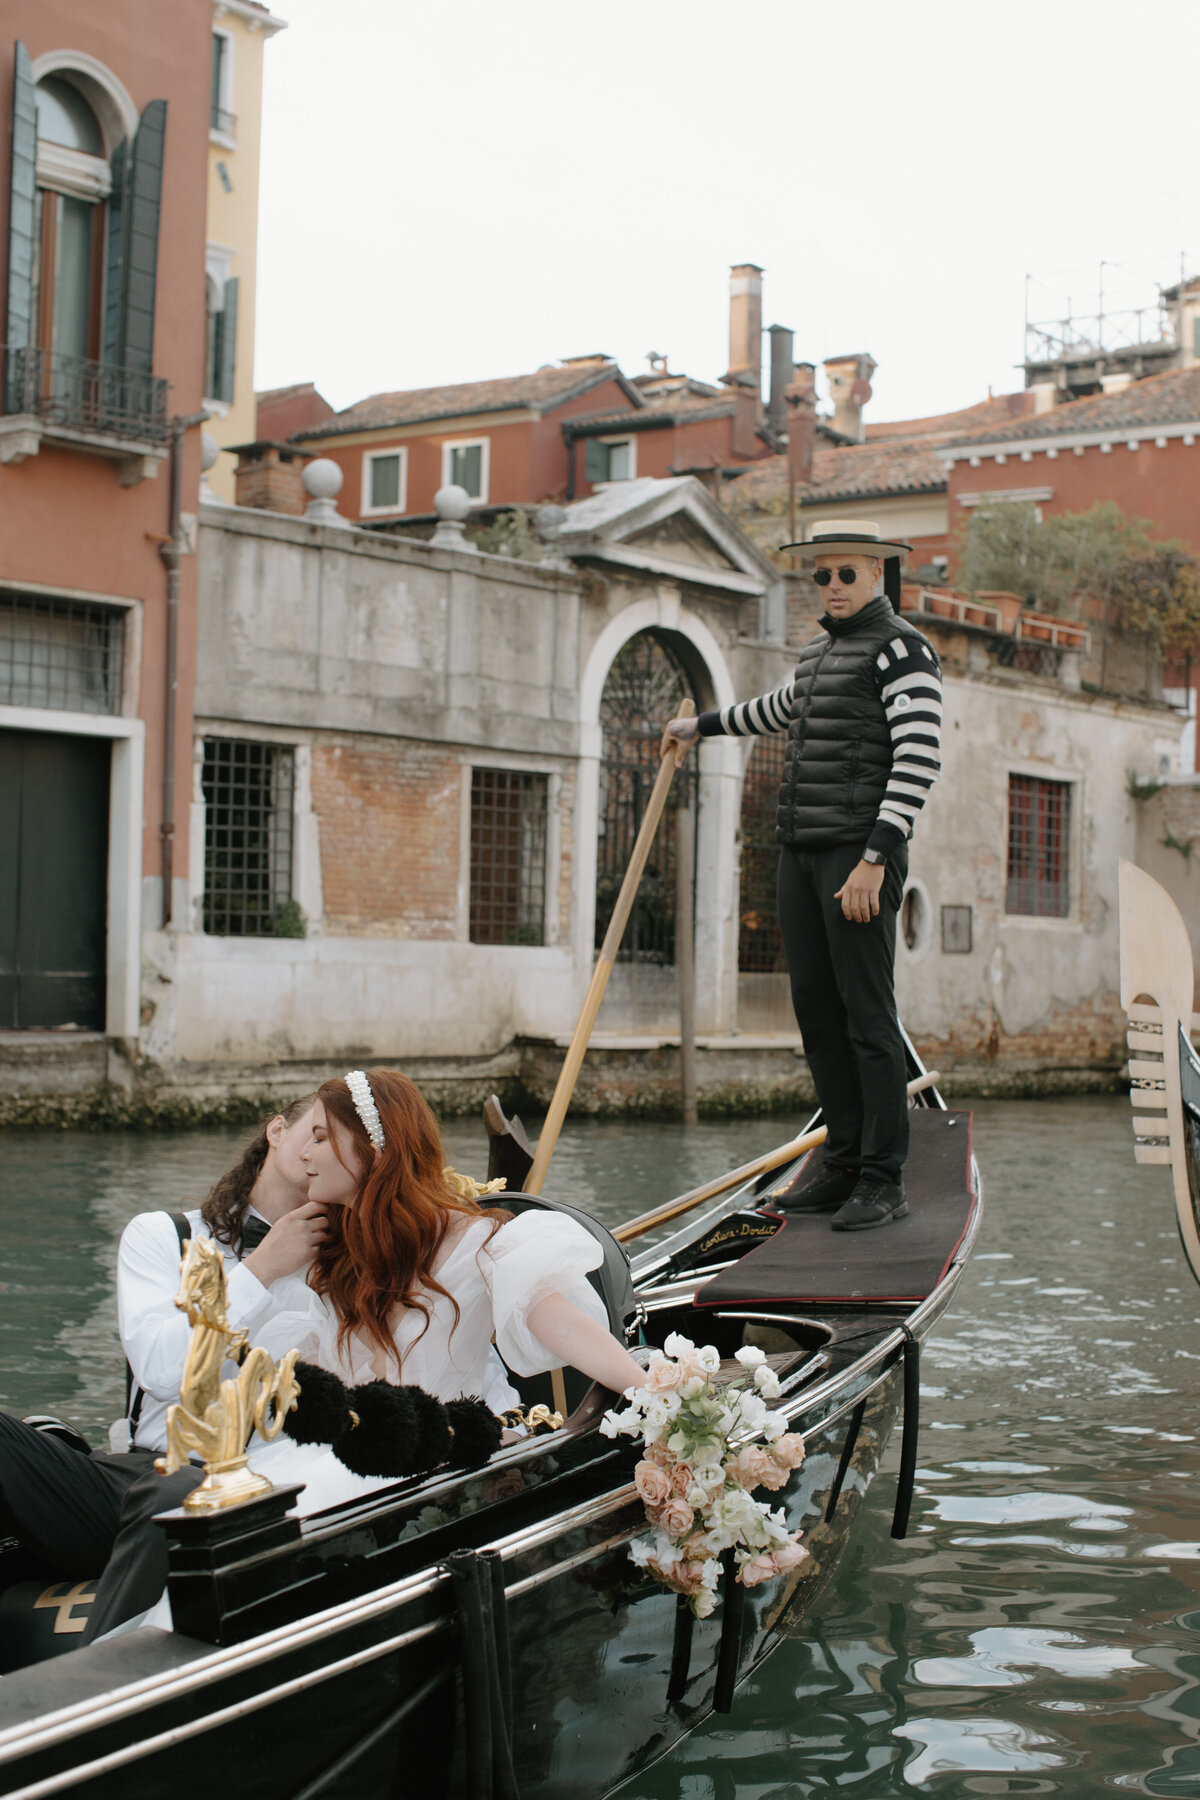 -Documentary-Style-Editorial-Vogue-gondola-Italy-Destination-Wedding-Leah-Gunn-PhotographyDocumentary-Style-Editorial-Vogue-gondola-Italy-Destination-Wedding-Leah-Gunn-Photography-71